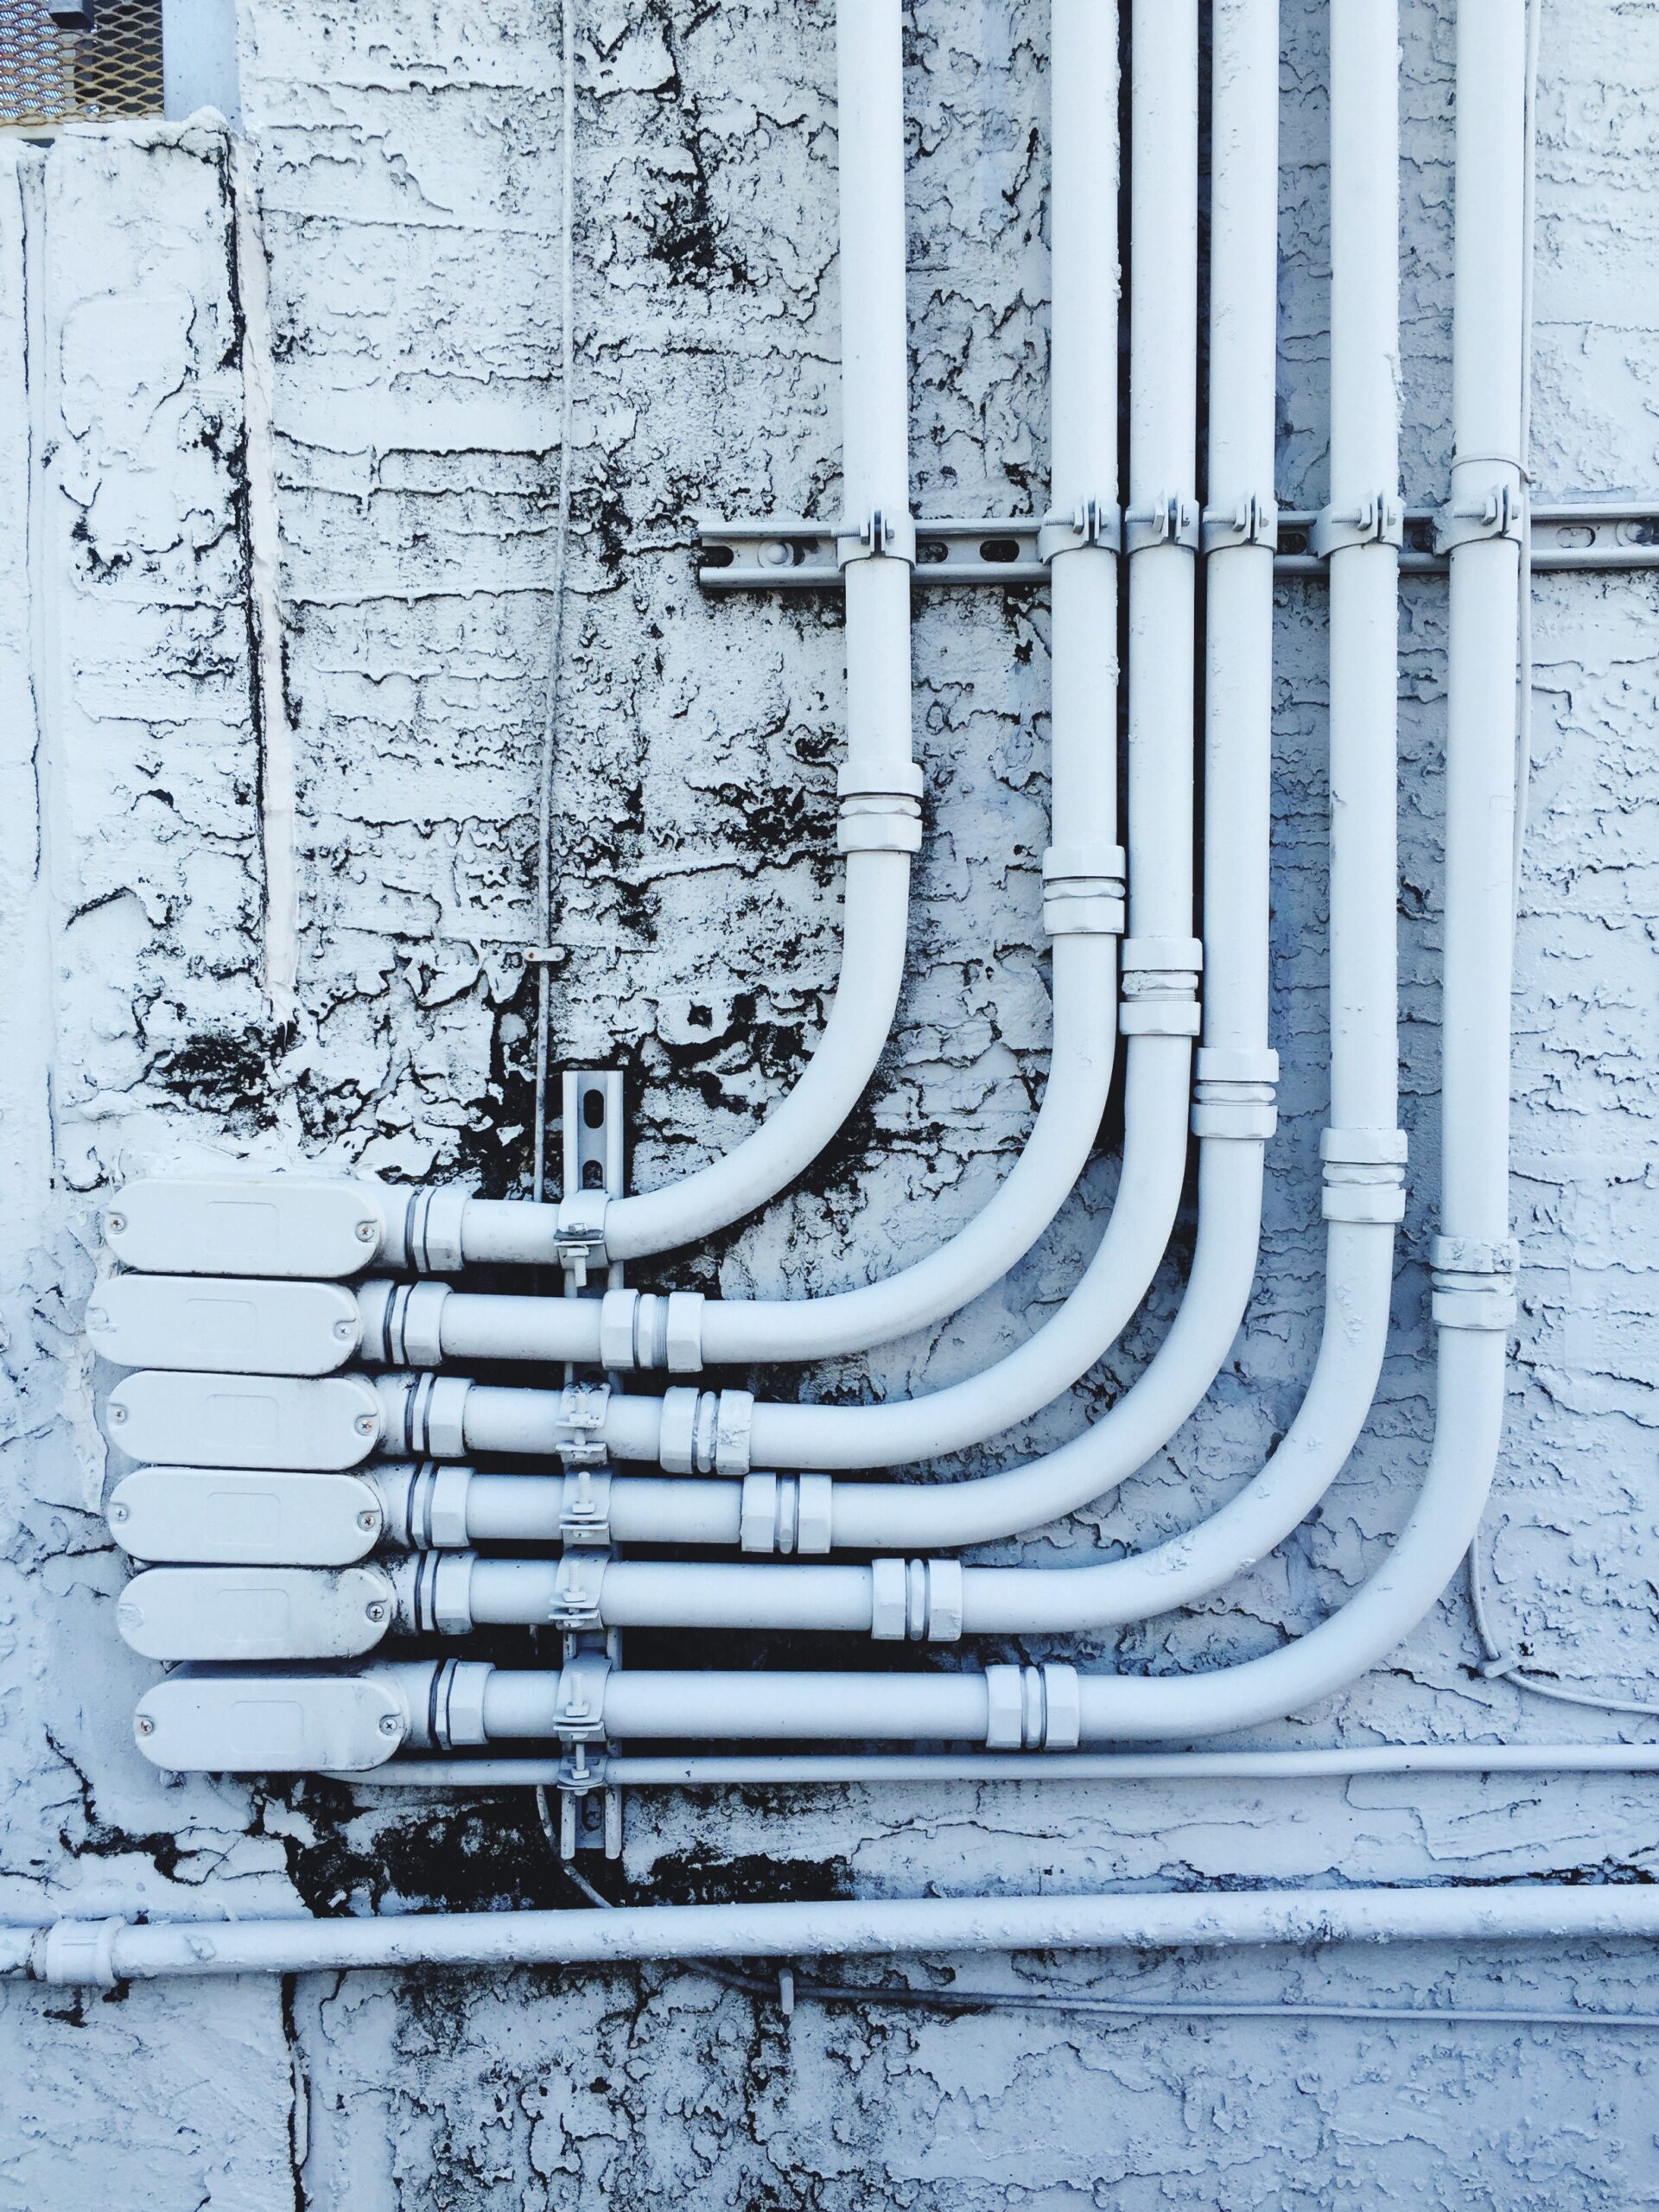 frozen hot water pipe